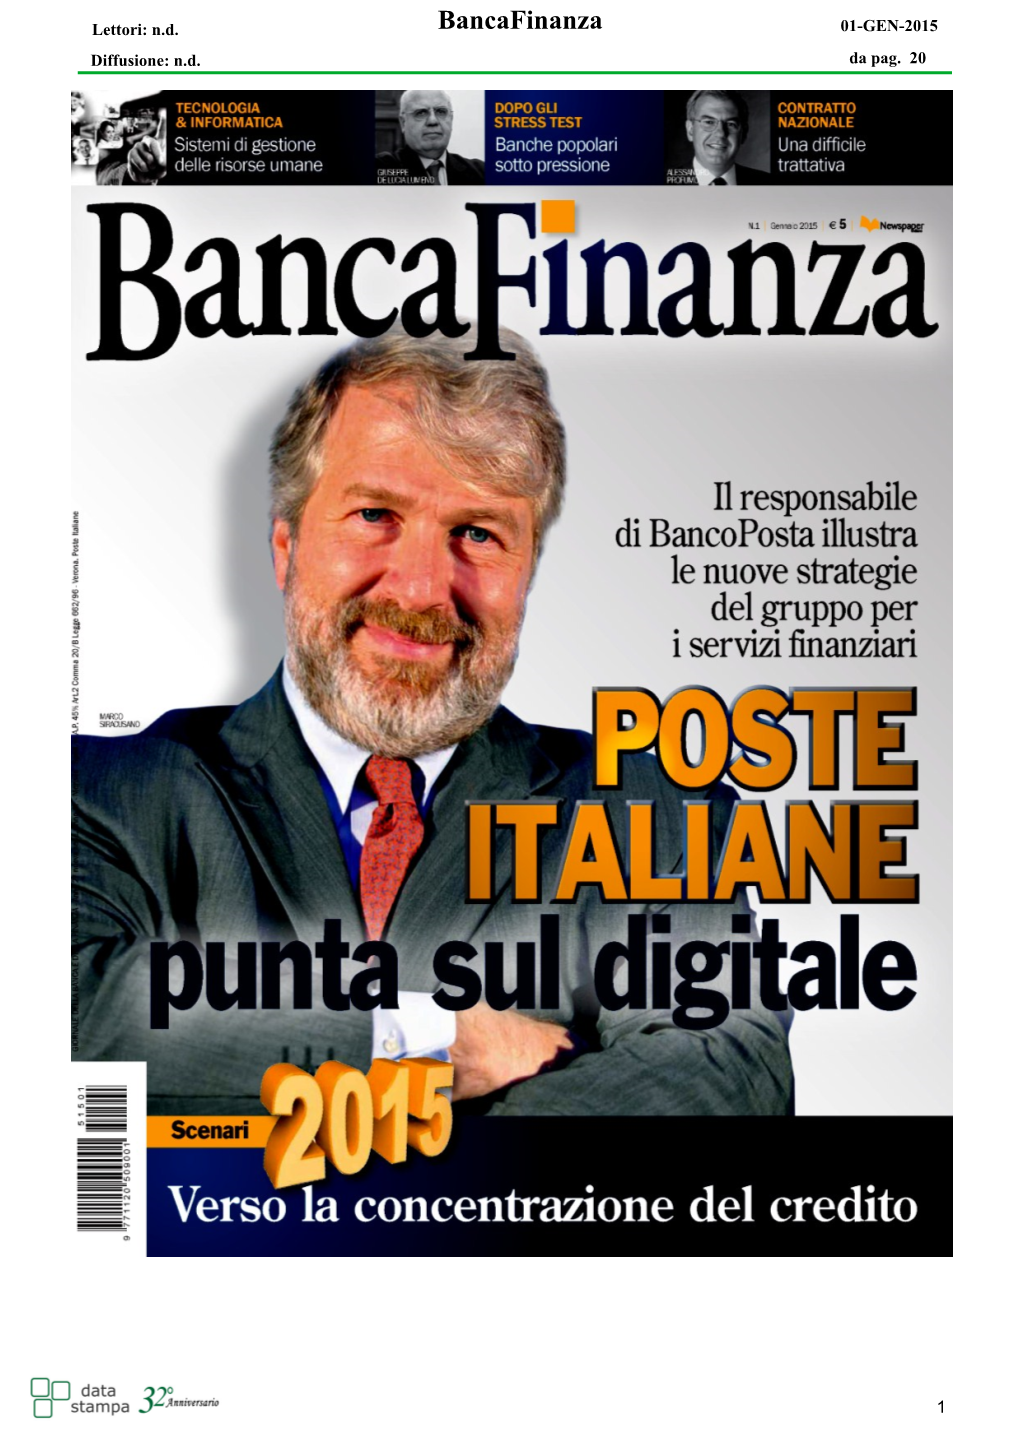 Bancafinanza 01-GEN-2015 Diffusione: N.D